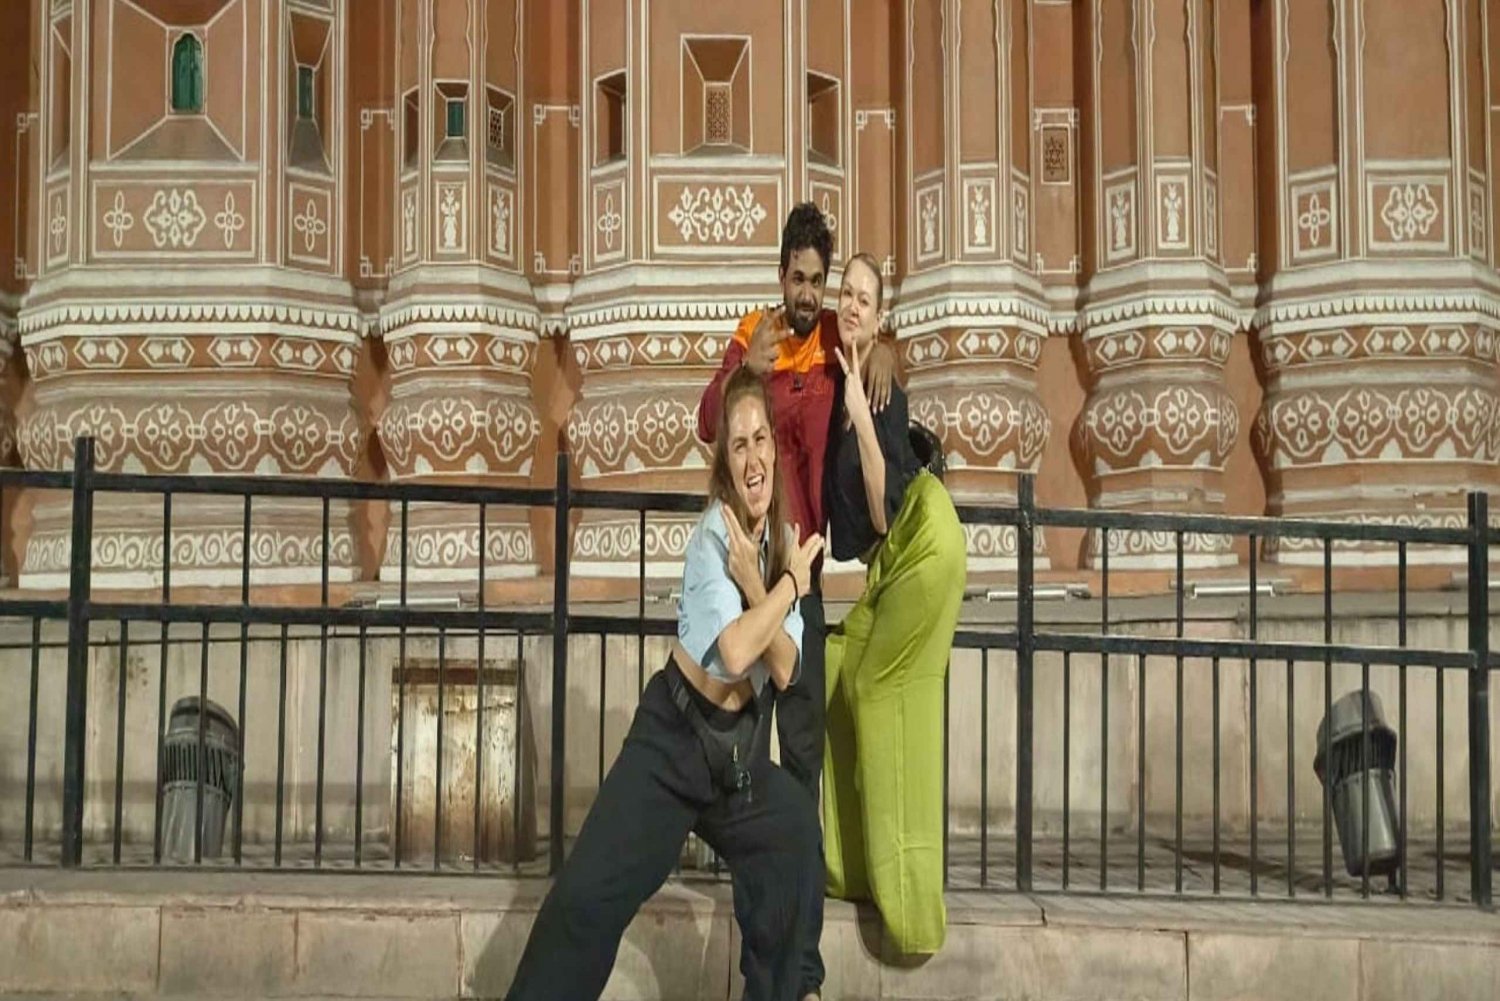 Delhi: Privet 3 Daagse Gouden Driehoek Delhi Agra Jaipur Tour